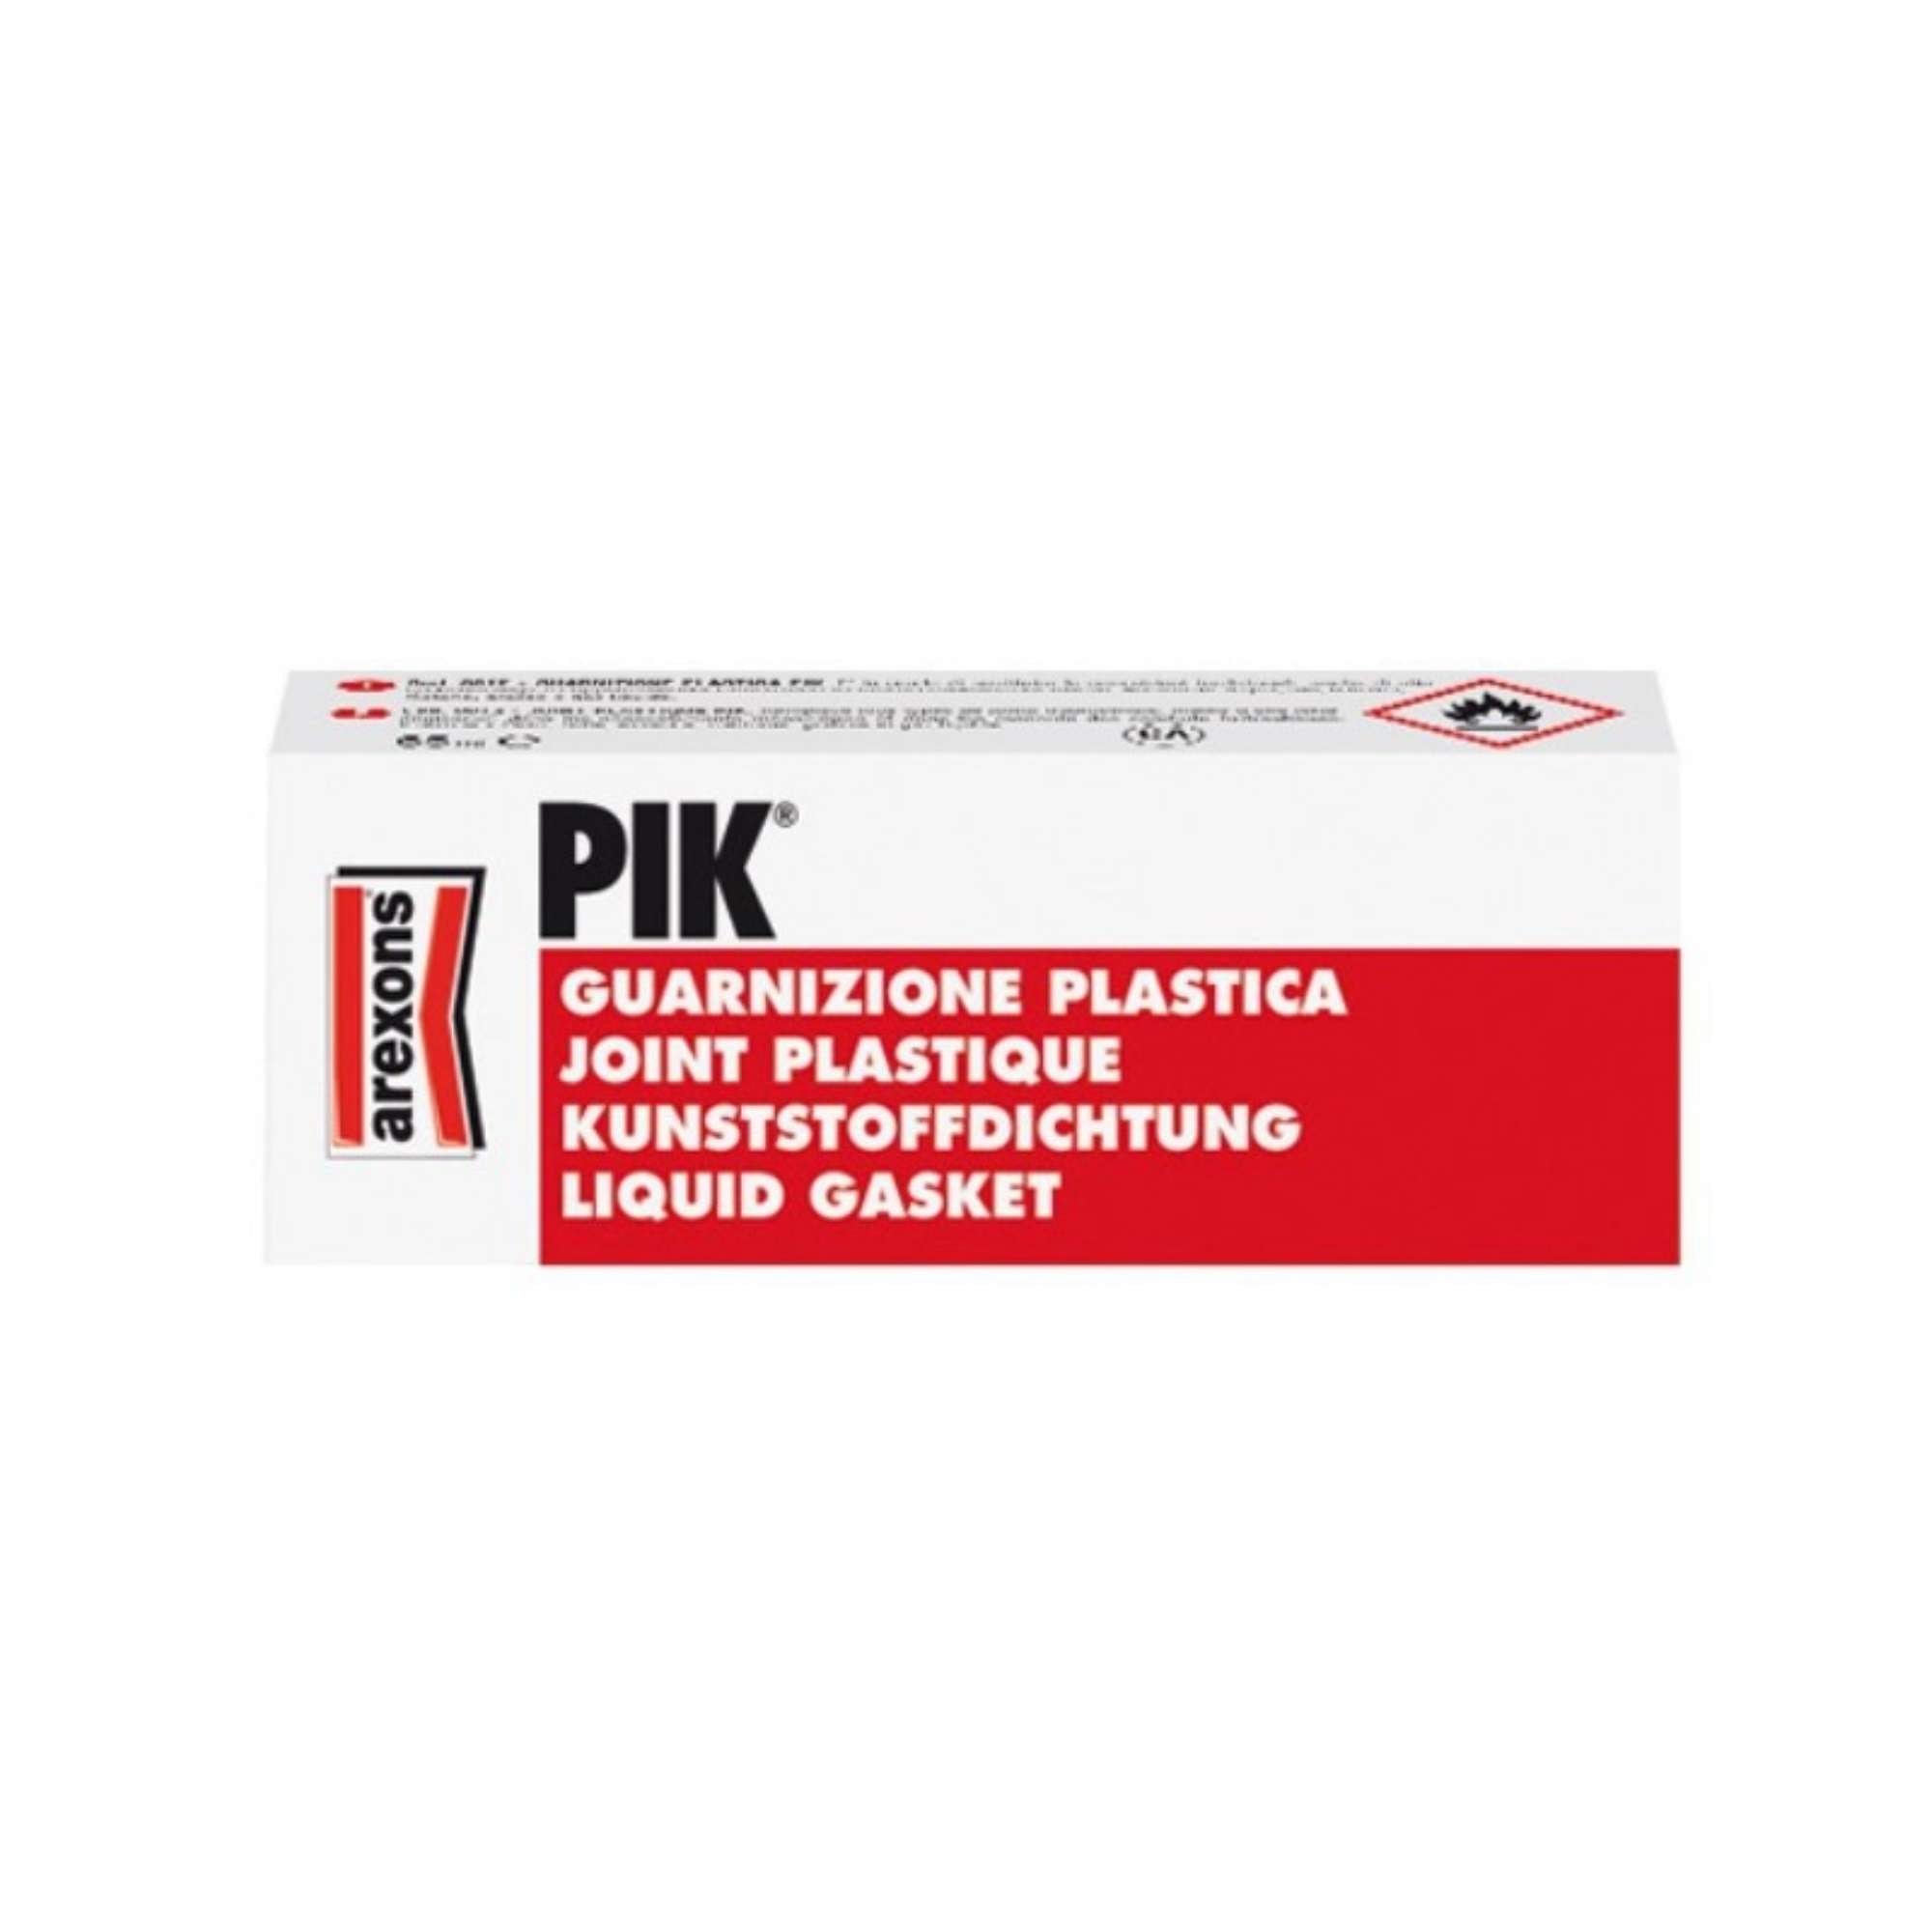 Pik liquid plastic gasket 65ml - Arexons 0012